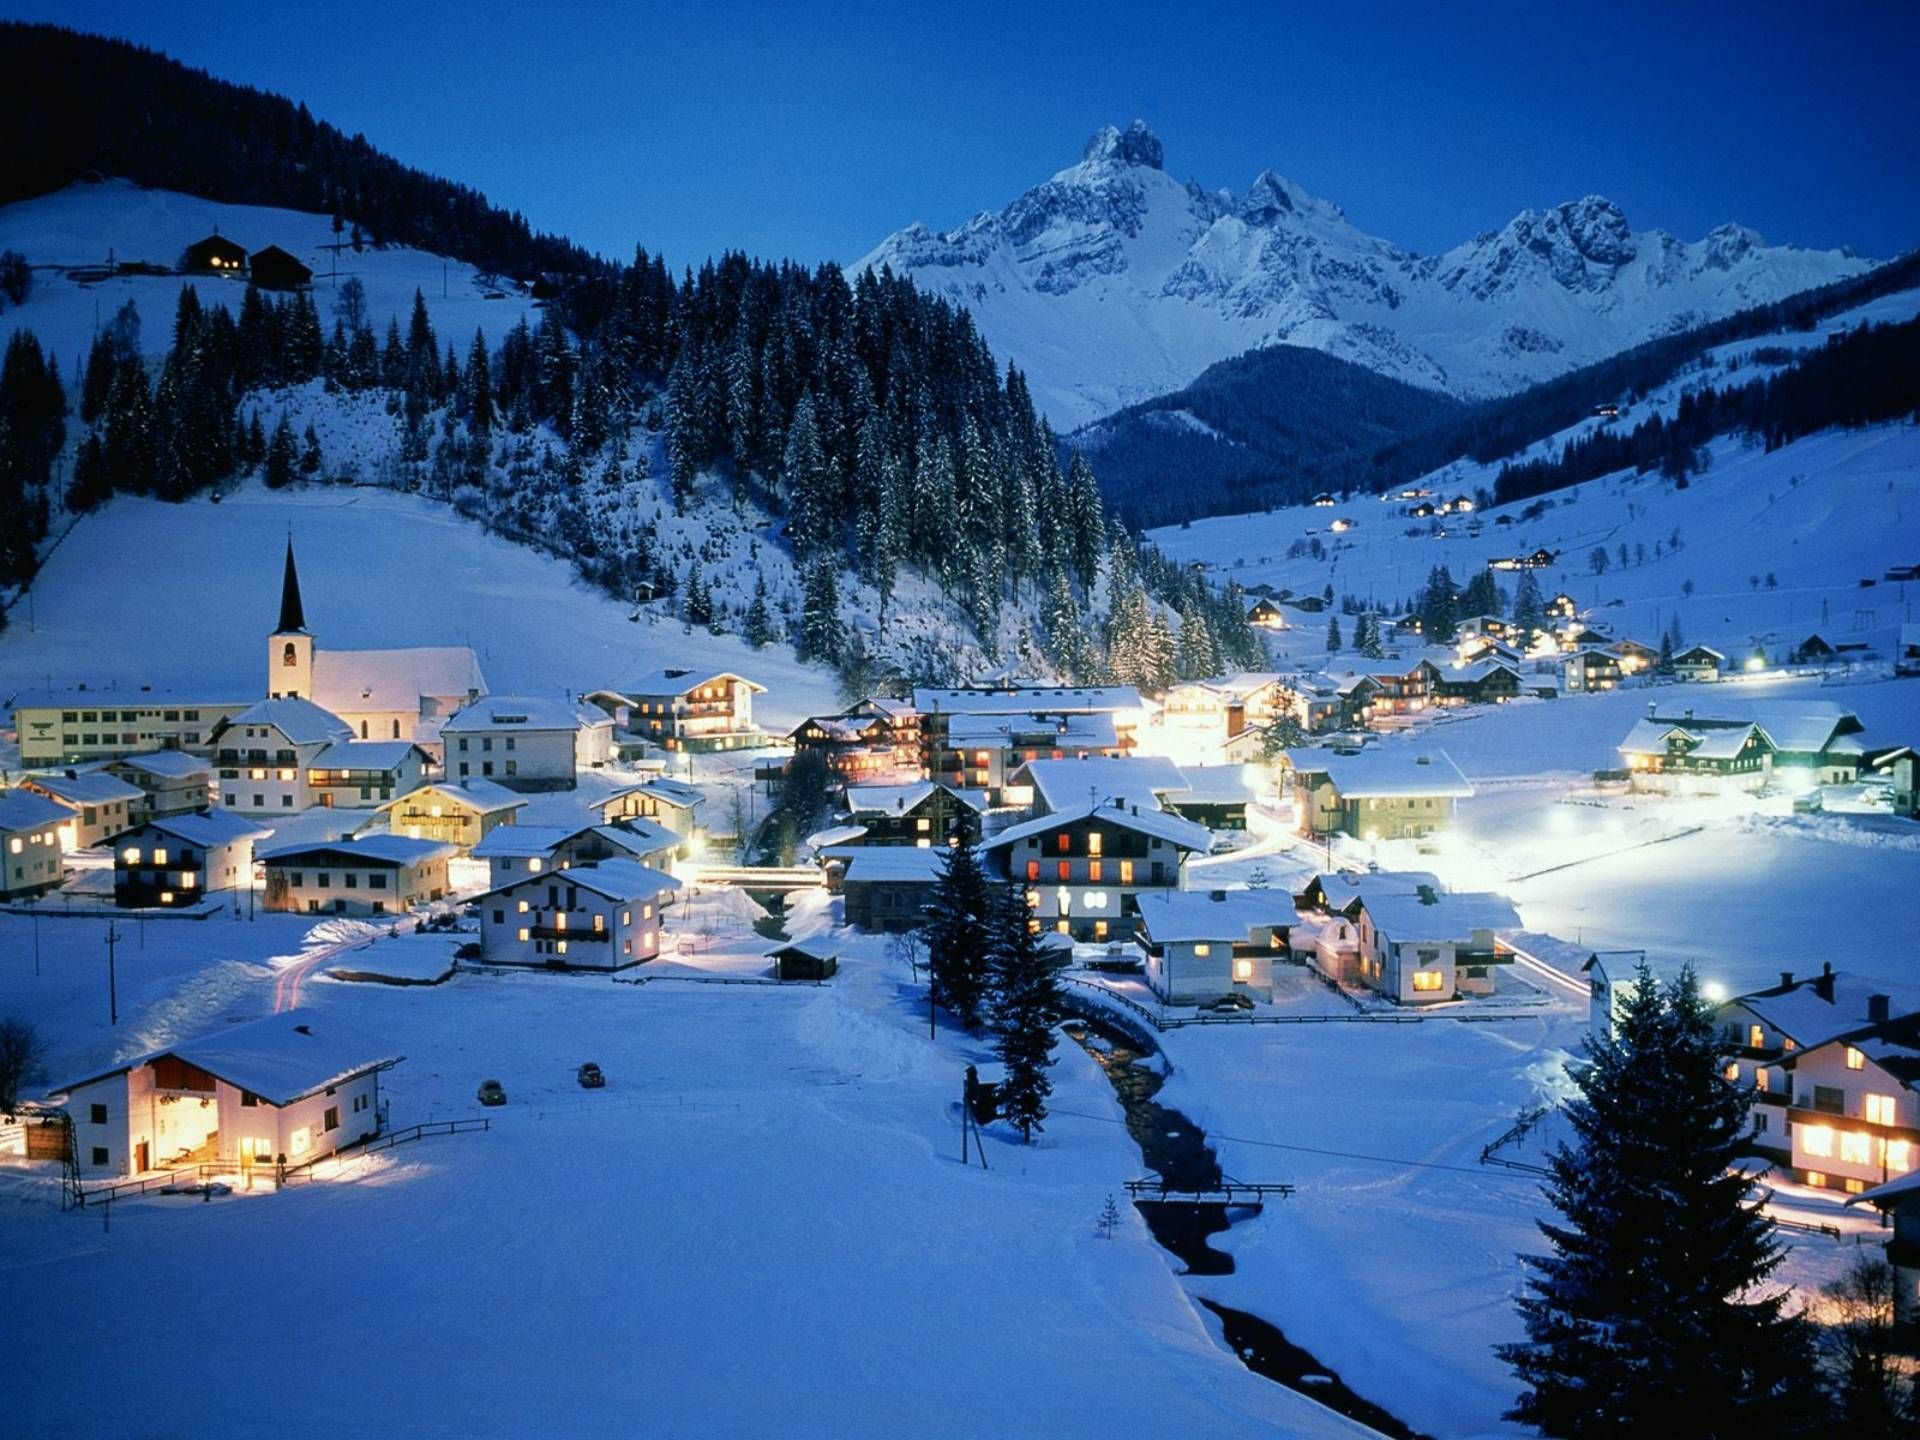 Winter night in Austria. I think this is Ischgl Ski Resort ...